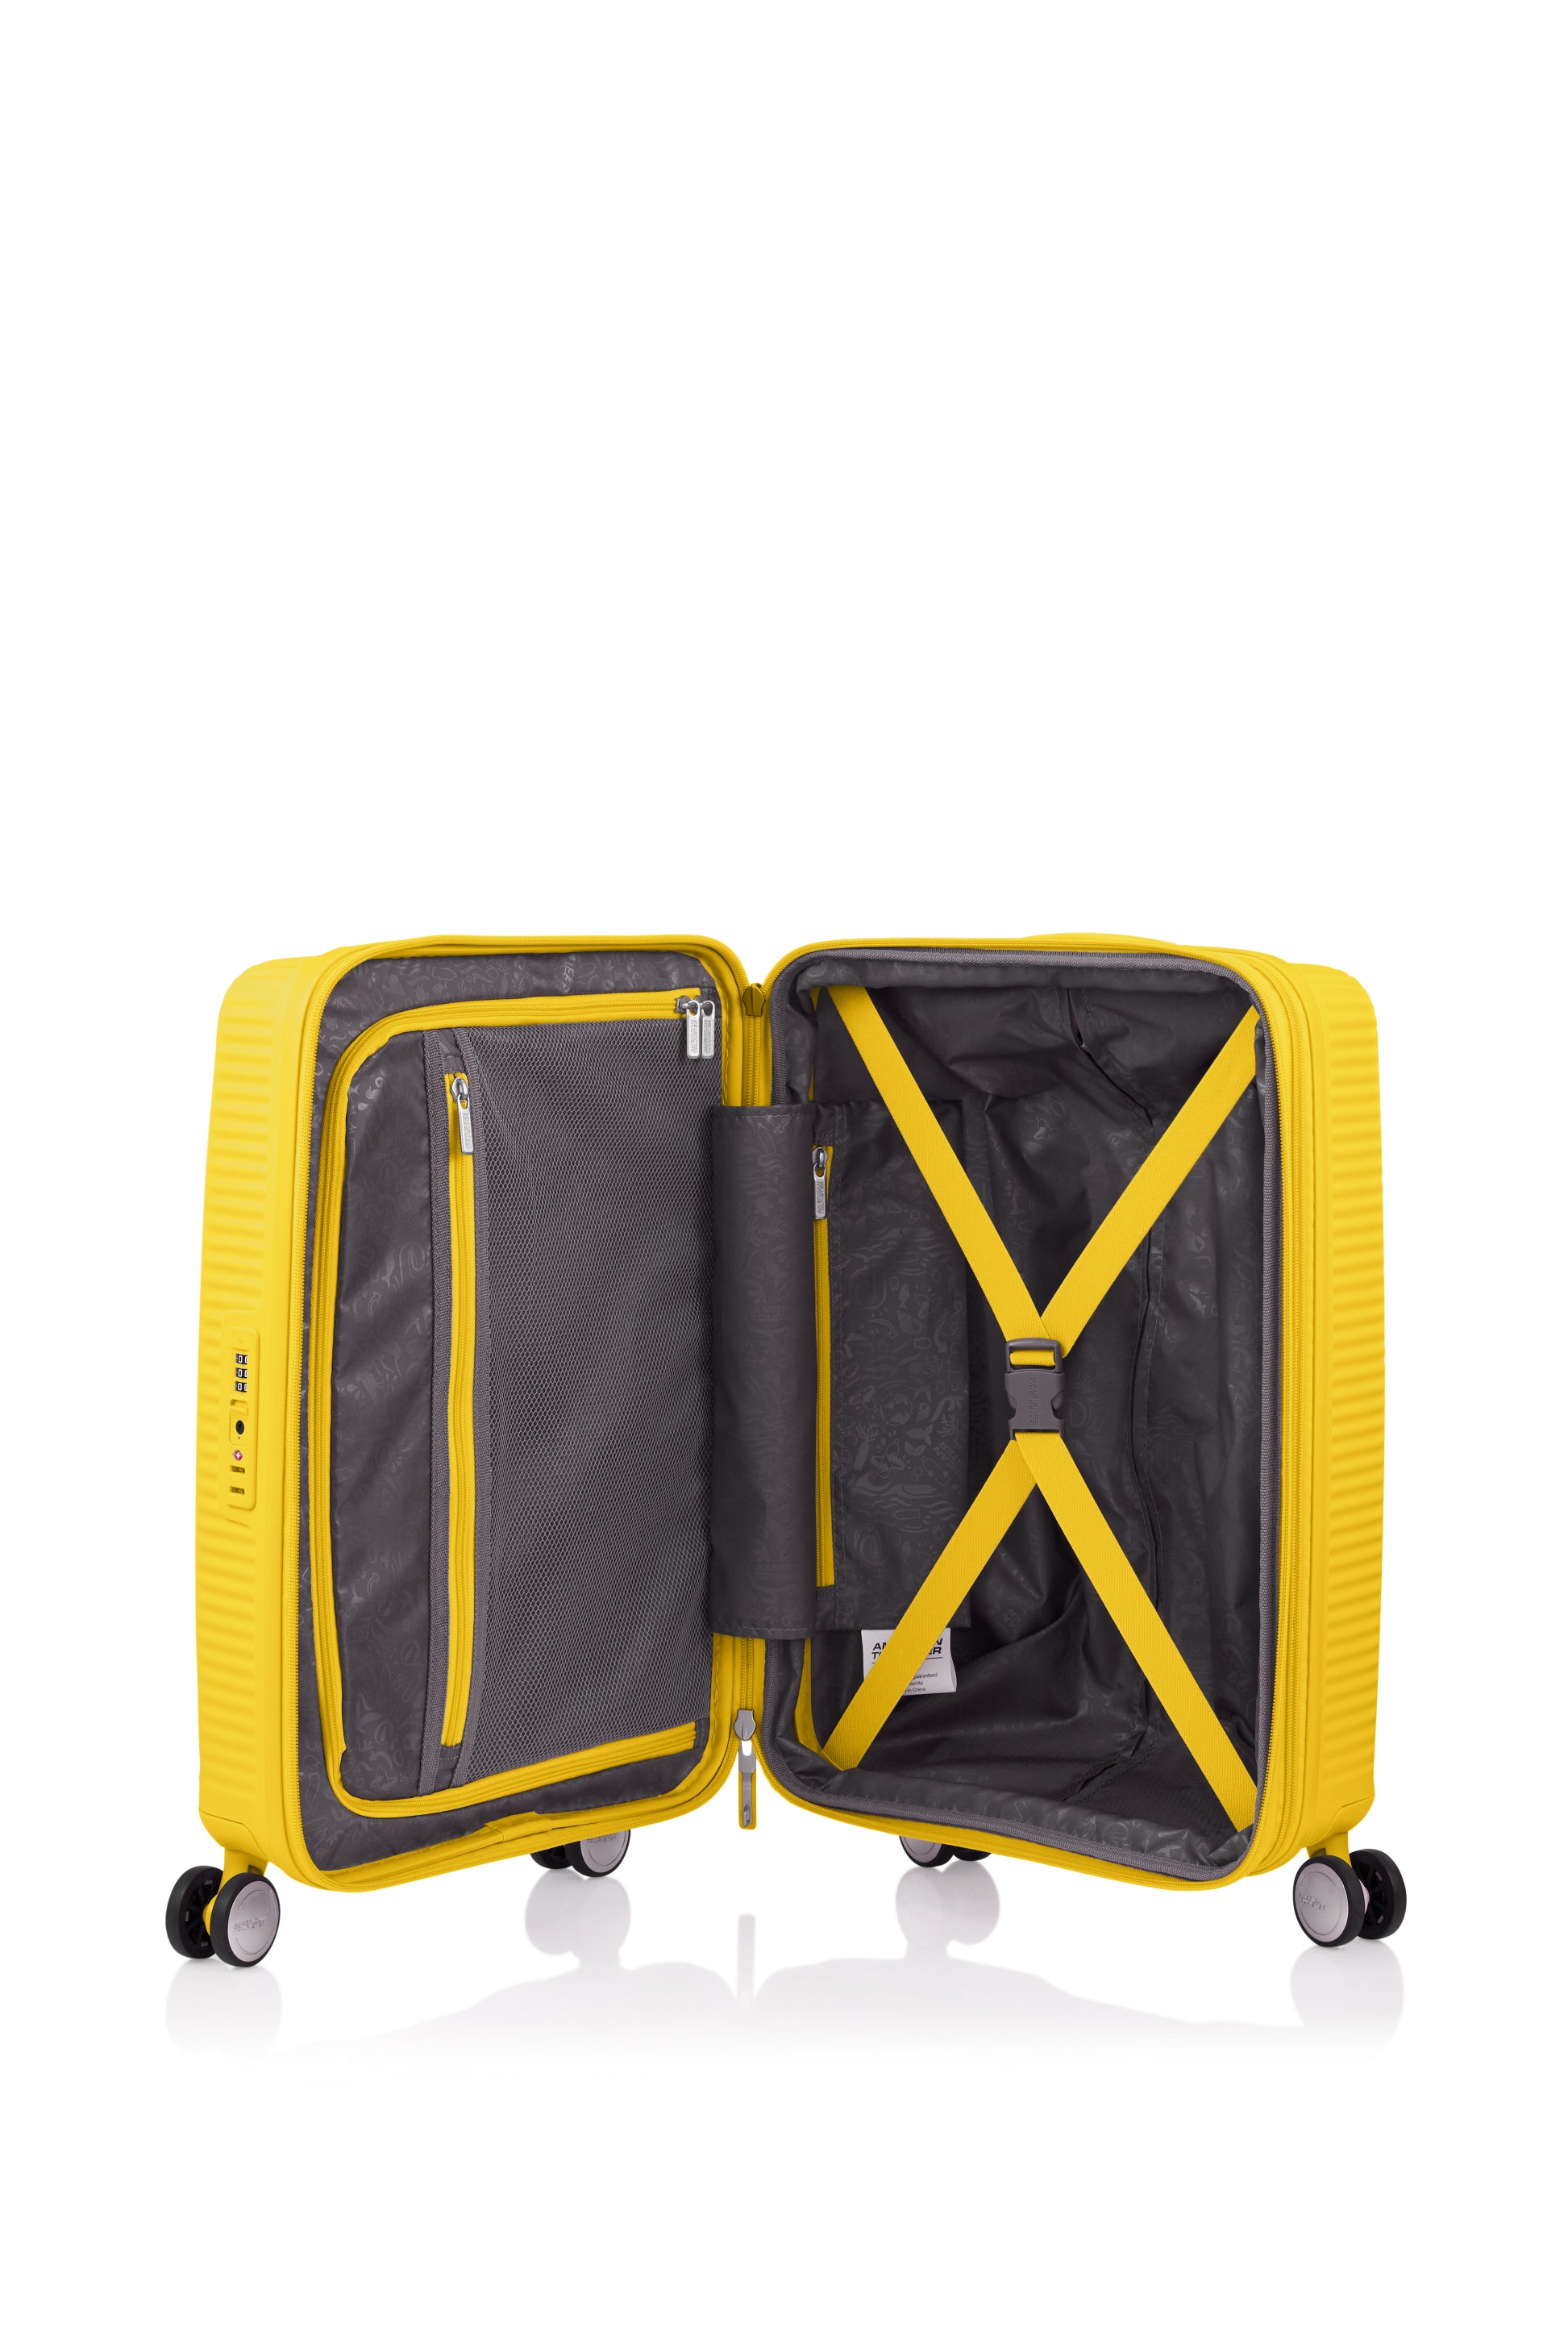 American Tourister - Curio 2.0 55cm Small Suitcase - Golden Yellow-3